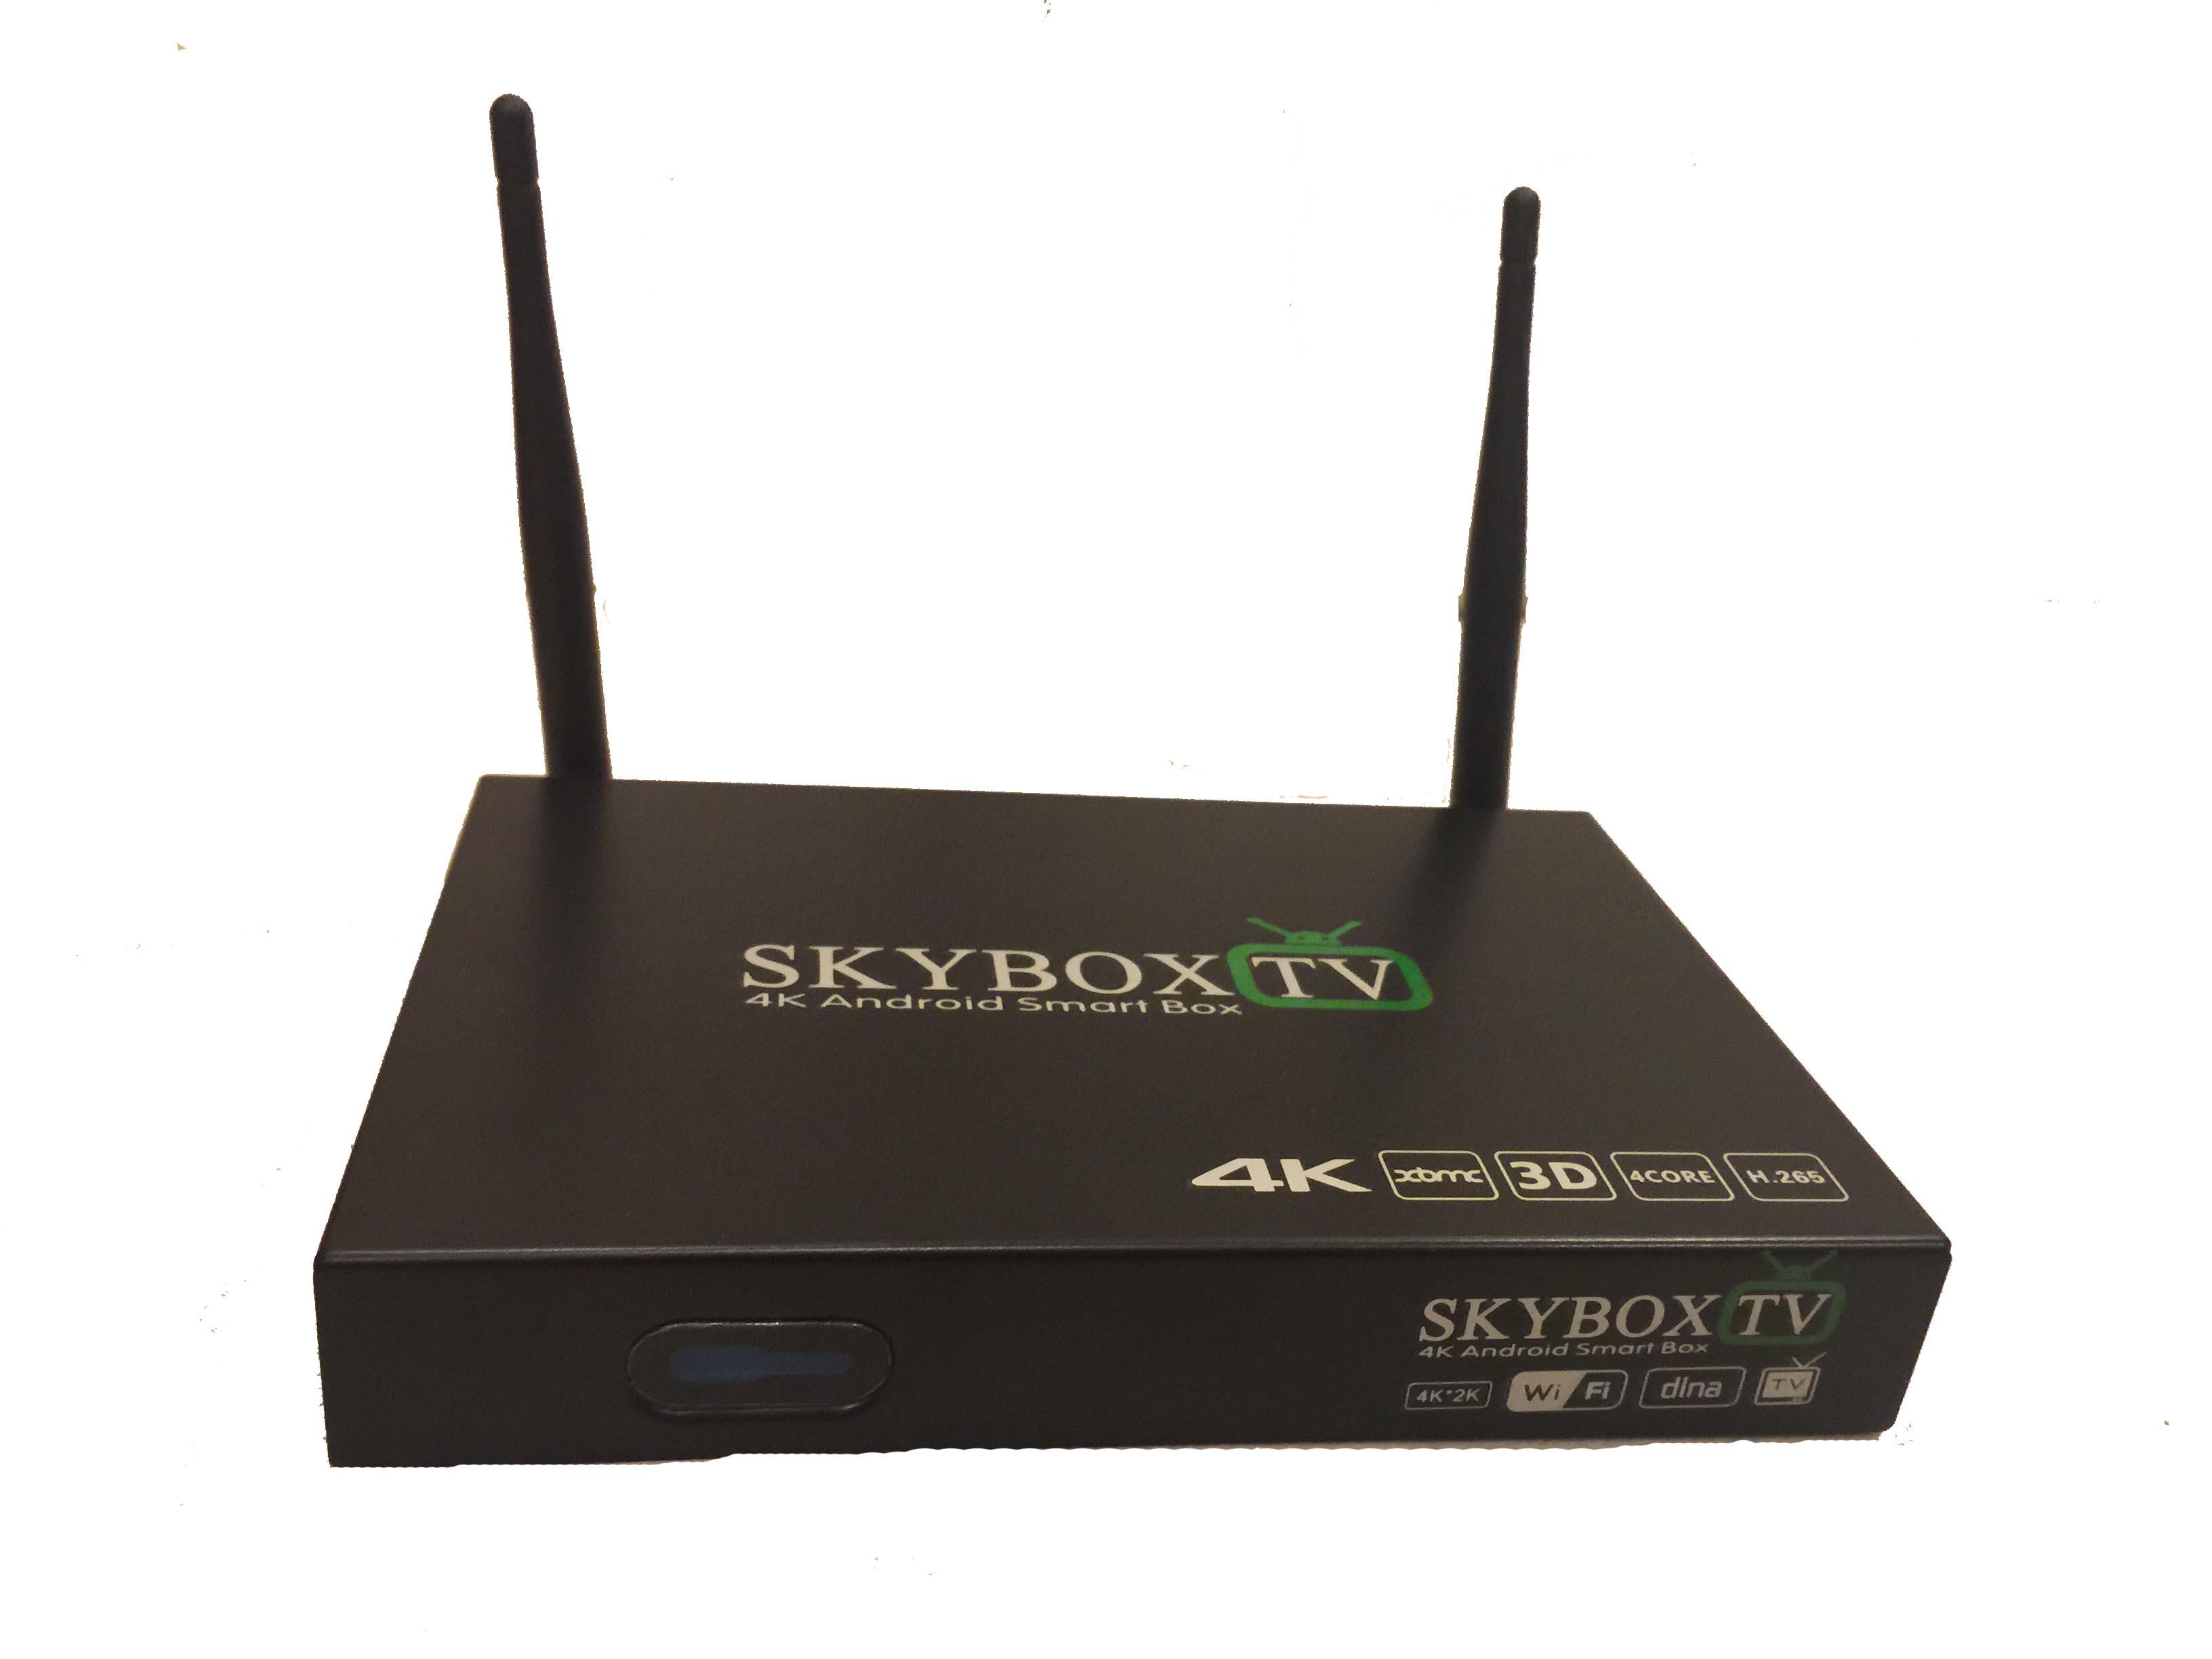 SkyboxTV H3 Plus smart box/TV Box